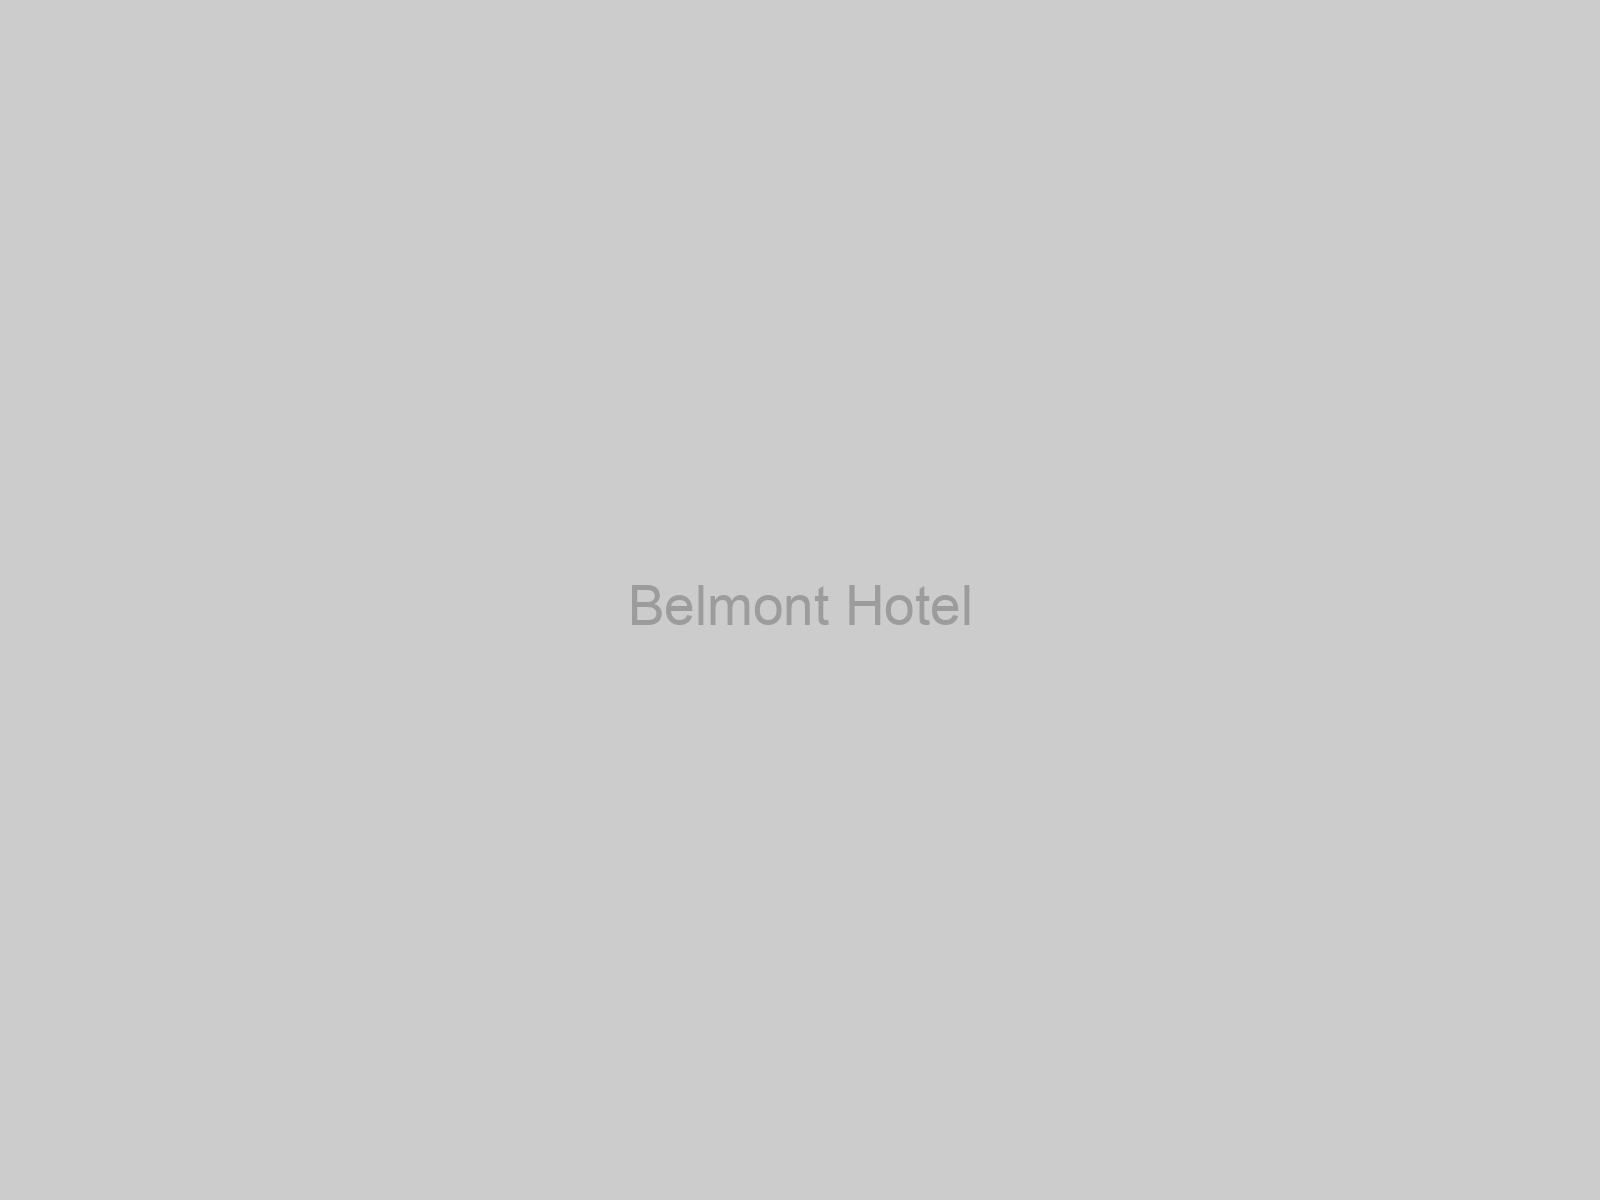 Belmont Hotel